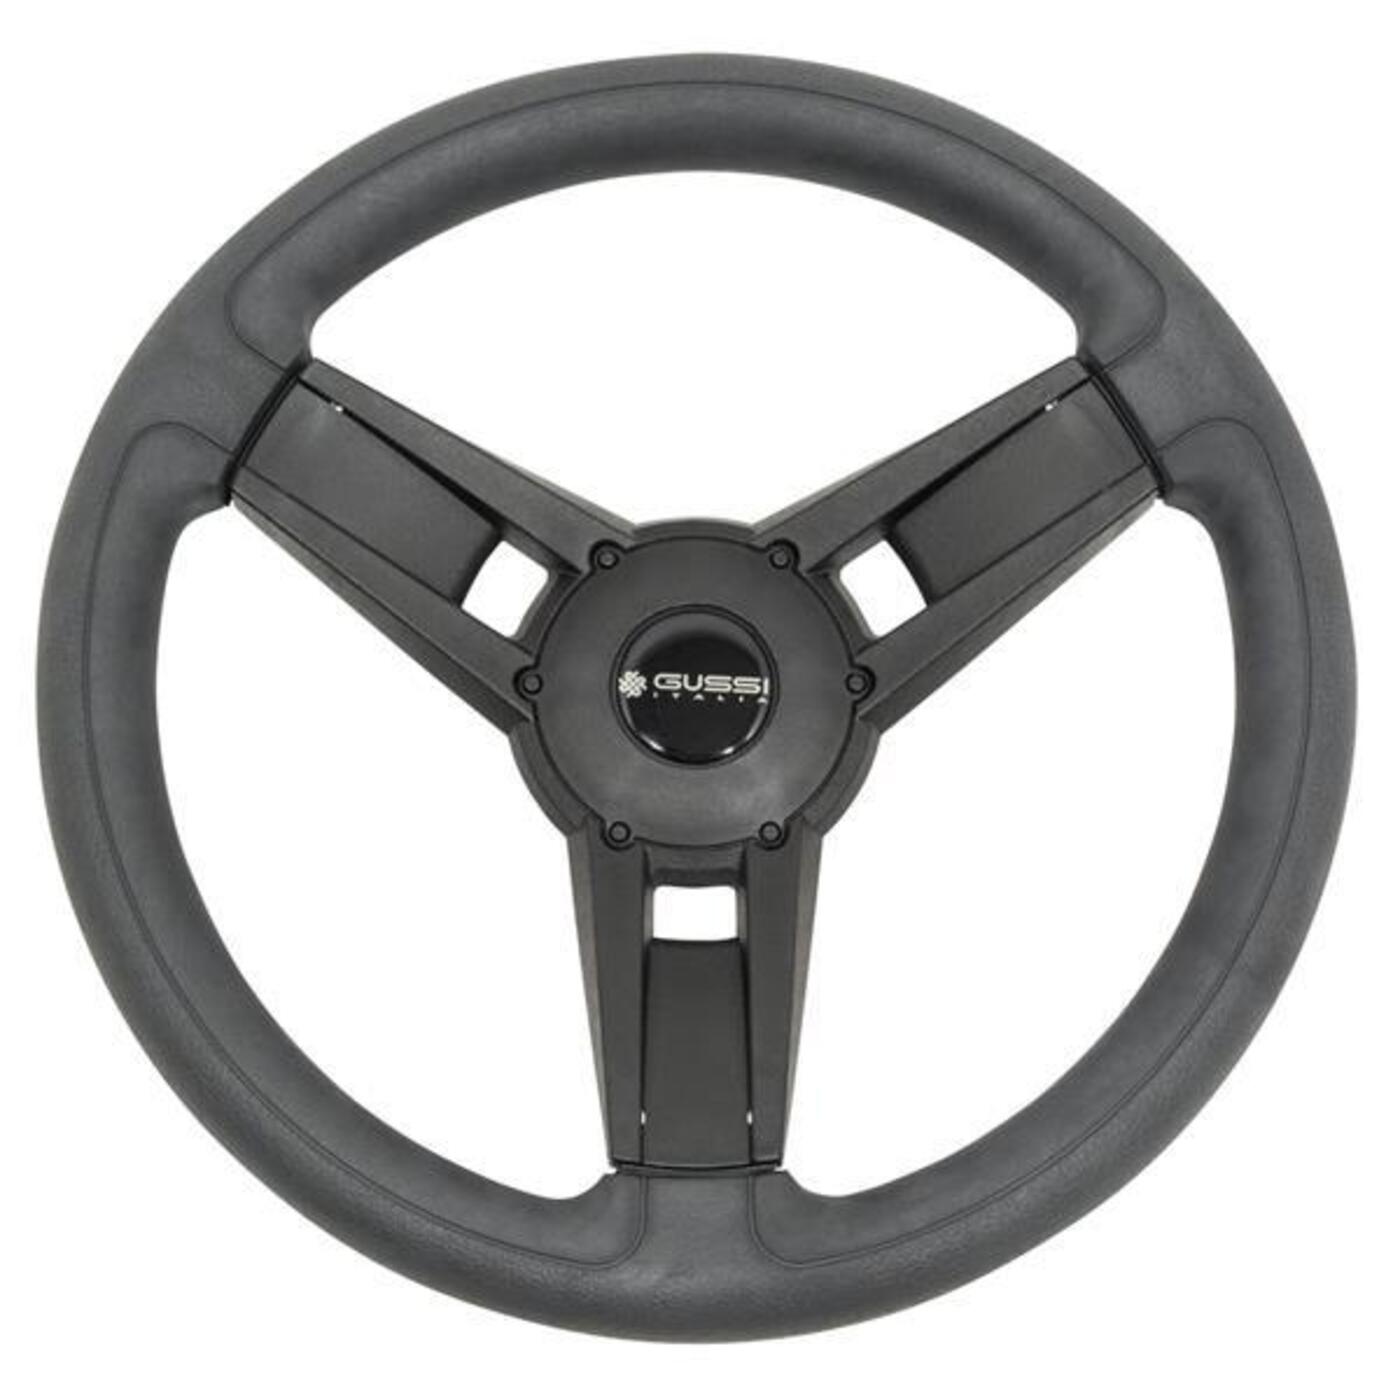 Gussi Italia Giazza Black Steering Wheel For All E-Z-GO TXT / RXV Models 06-020